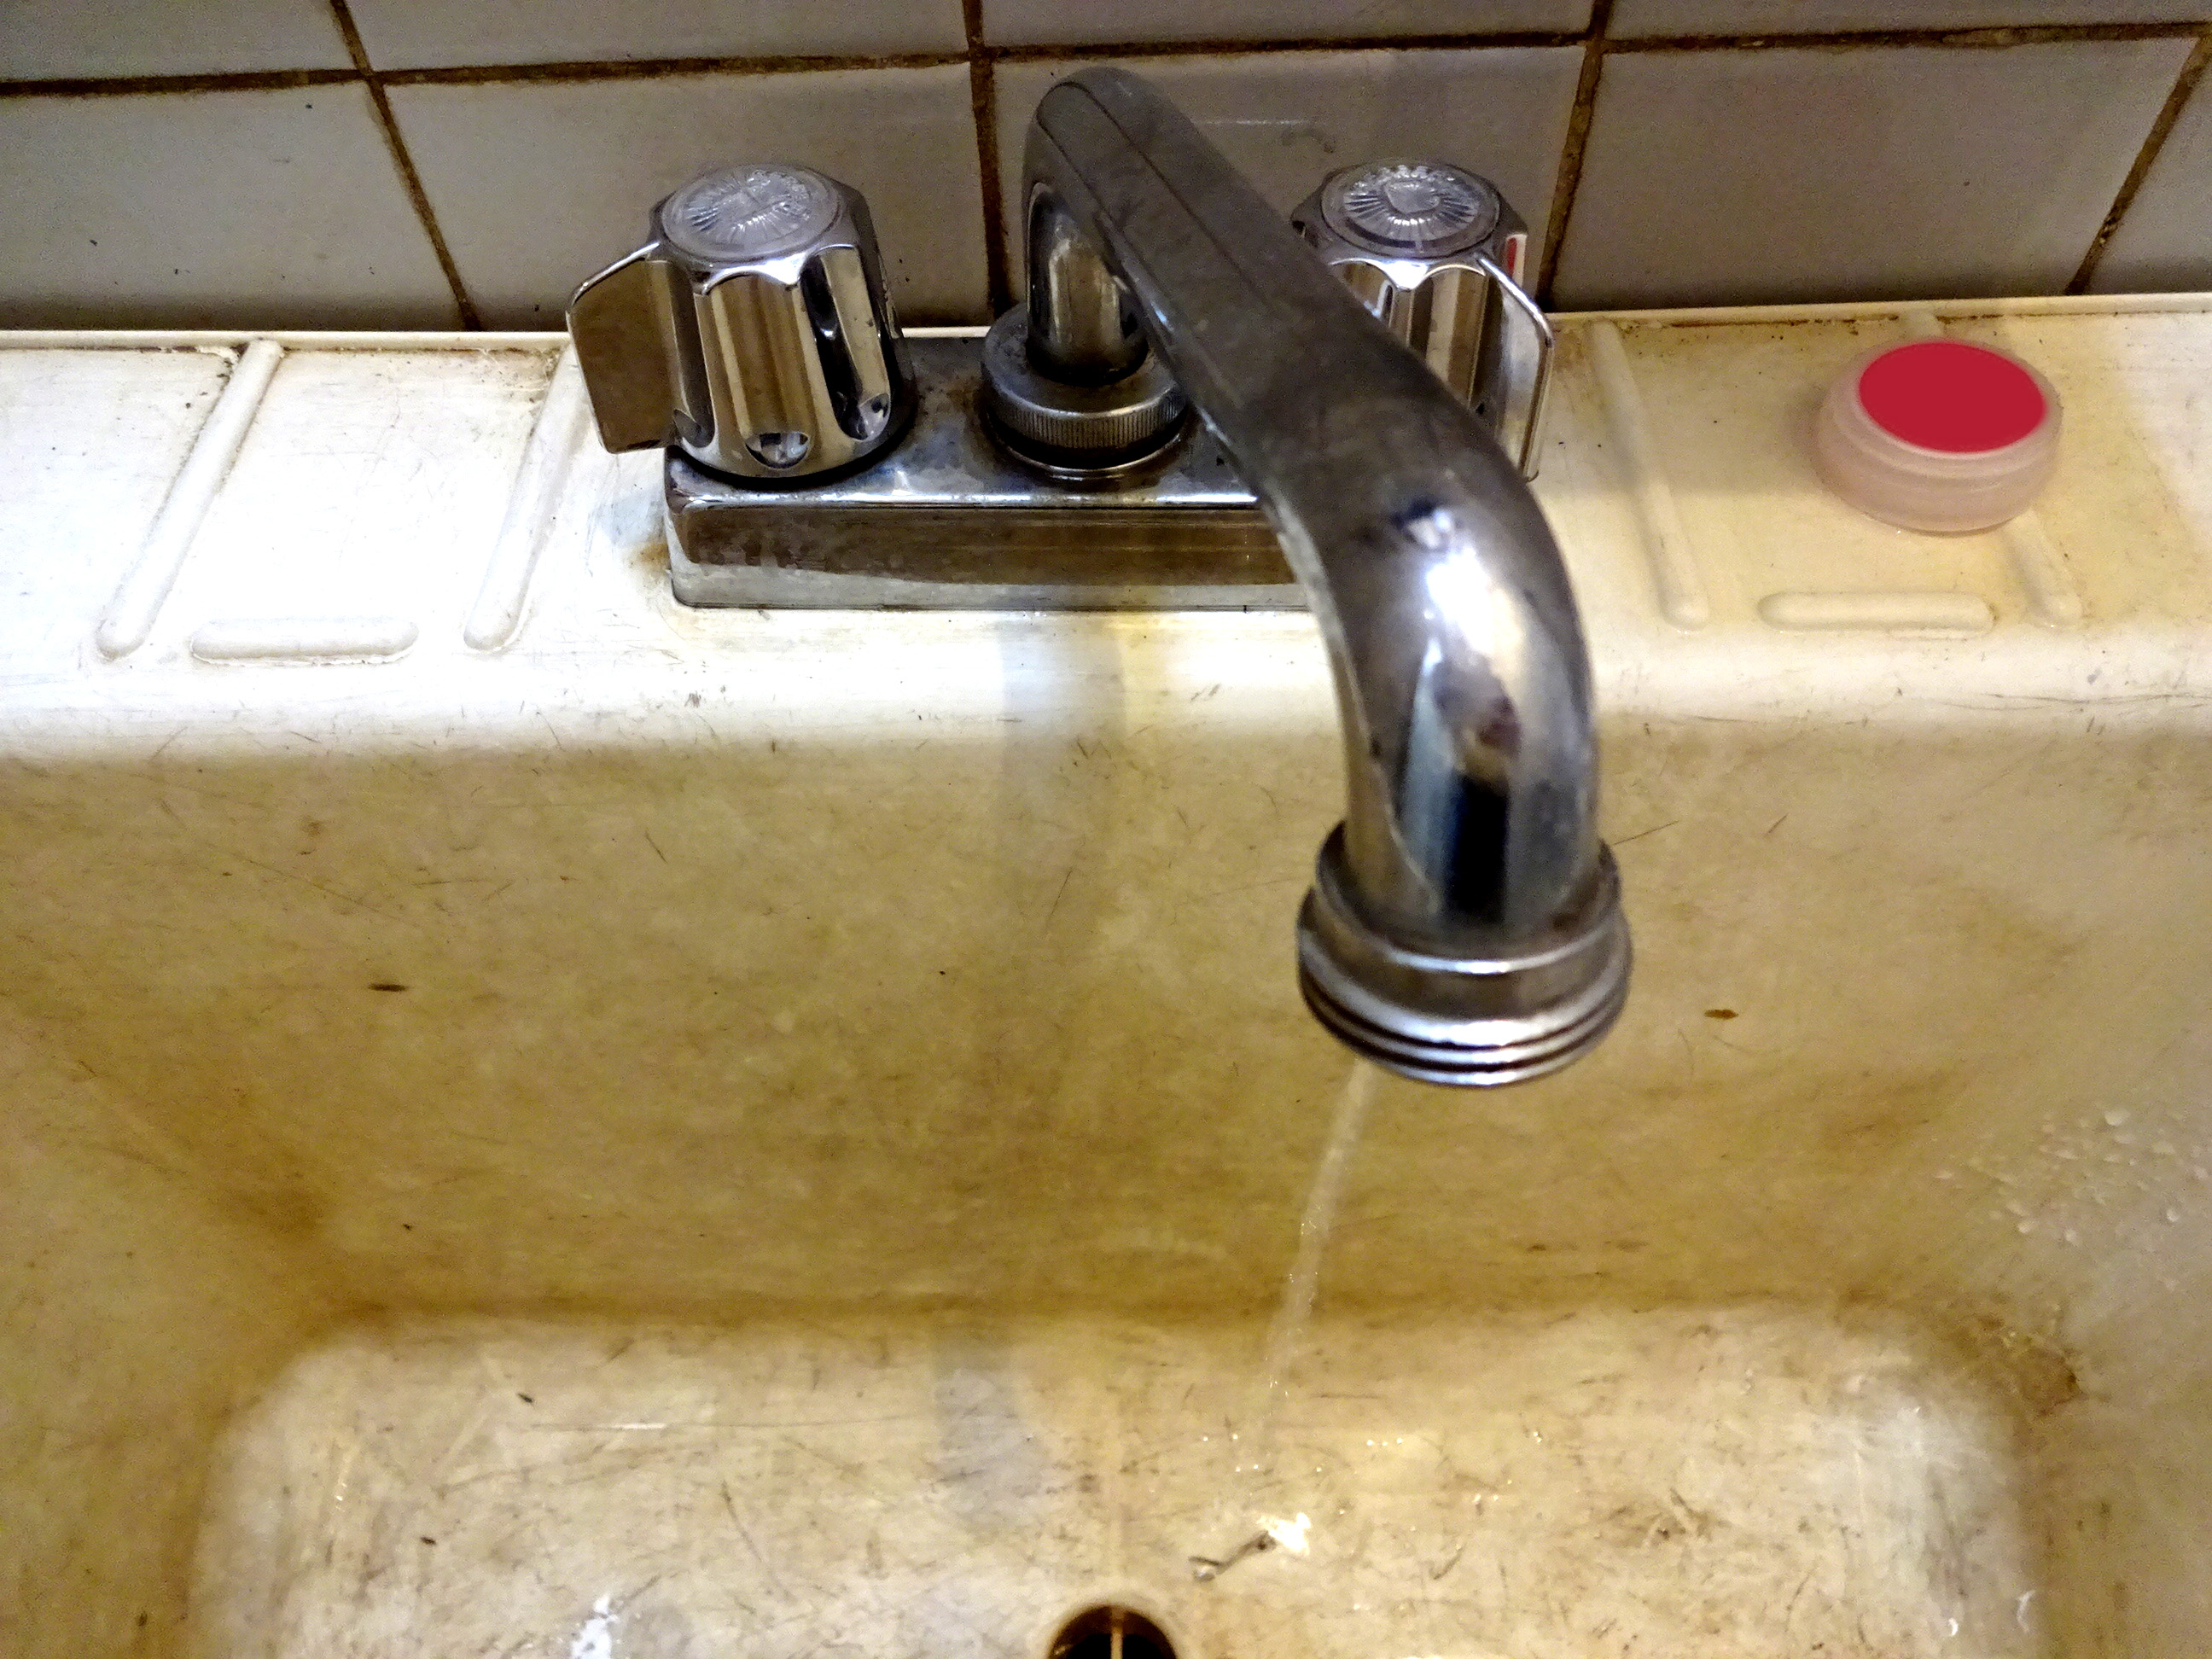 lost water pressure in kitchen sink and dishwasher